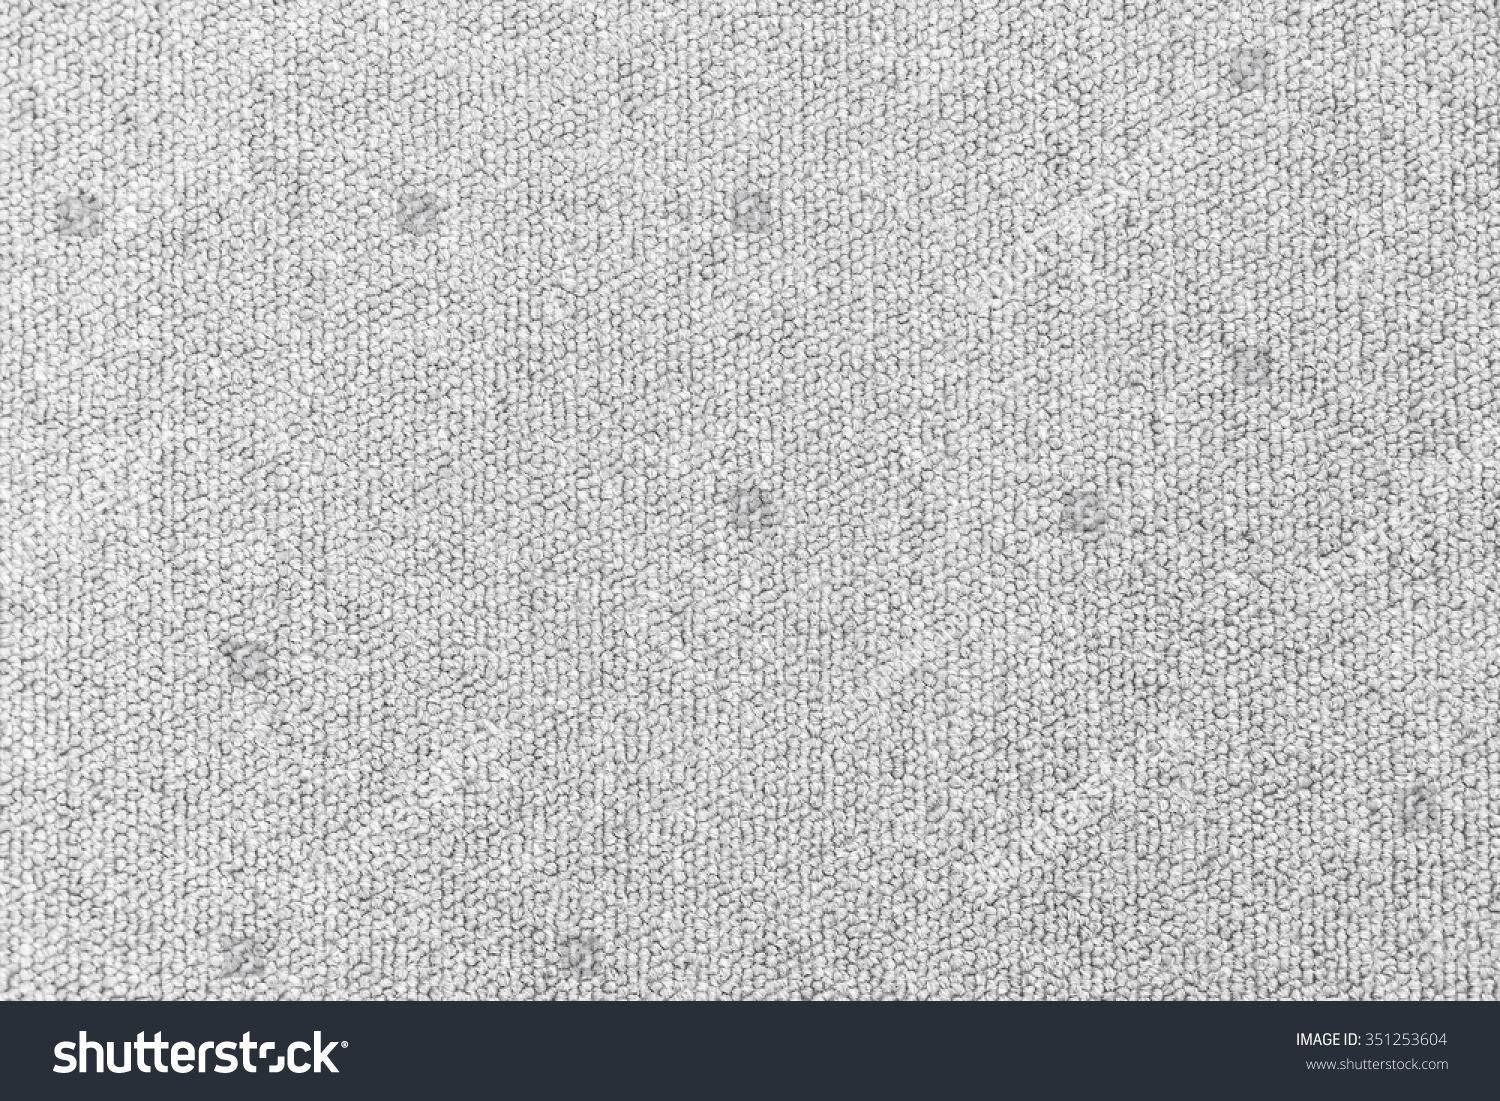 Grey Carper Texture Background Stock Photo 351253604 | Shutterstock